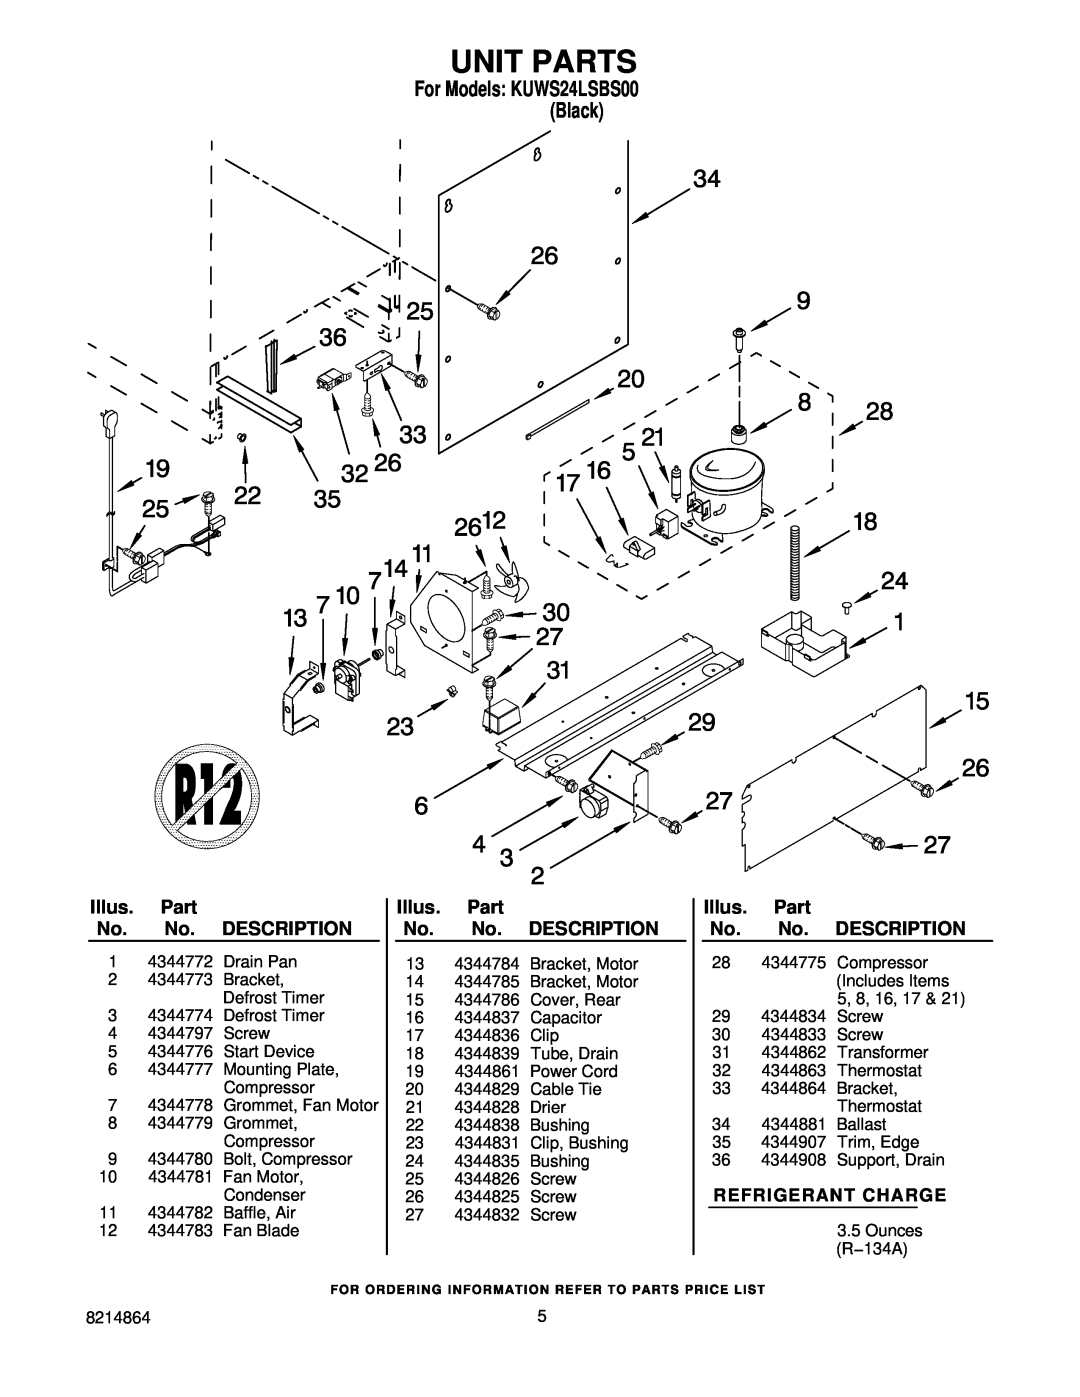 KitchenAid KUWS24LSBS00 manual Unit Parts, Refrigerant Charge, Illus. Part No. No. DESCRIPTION 